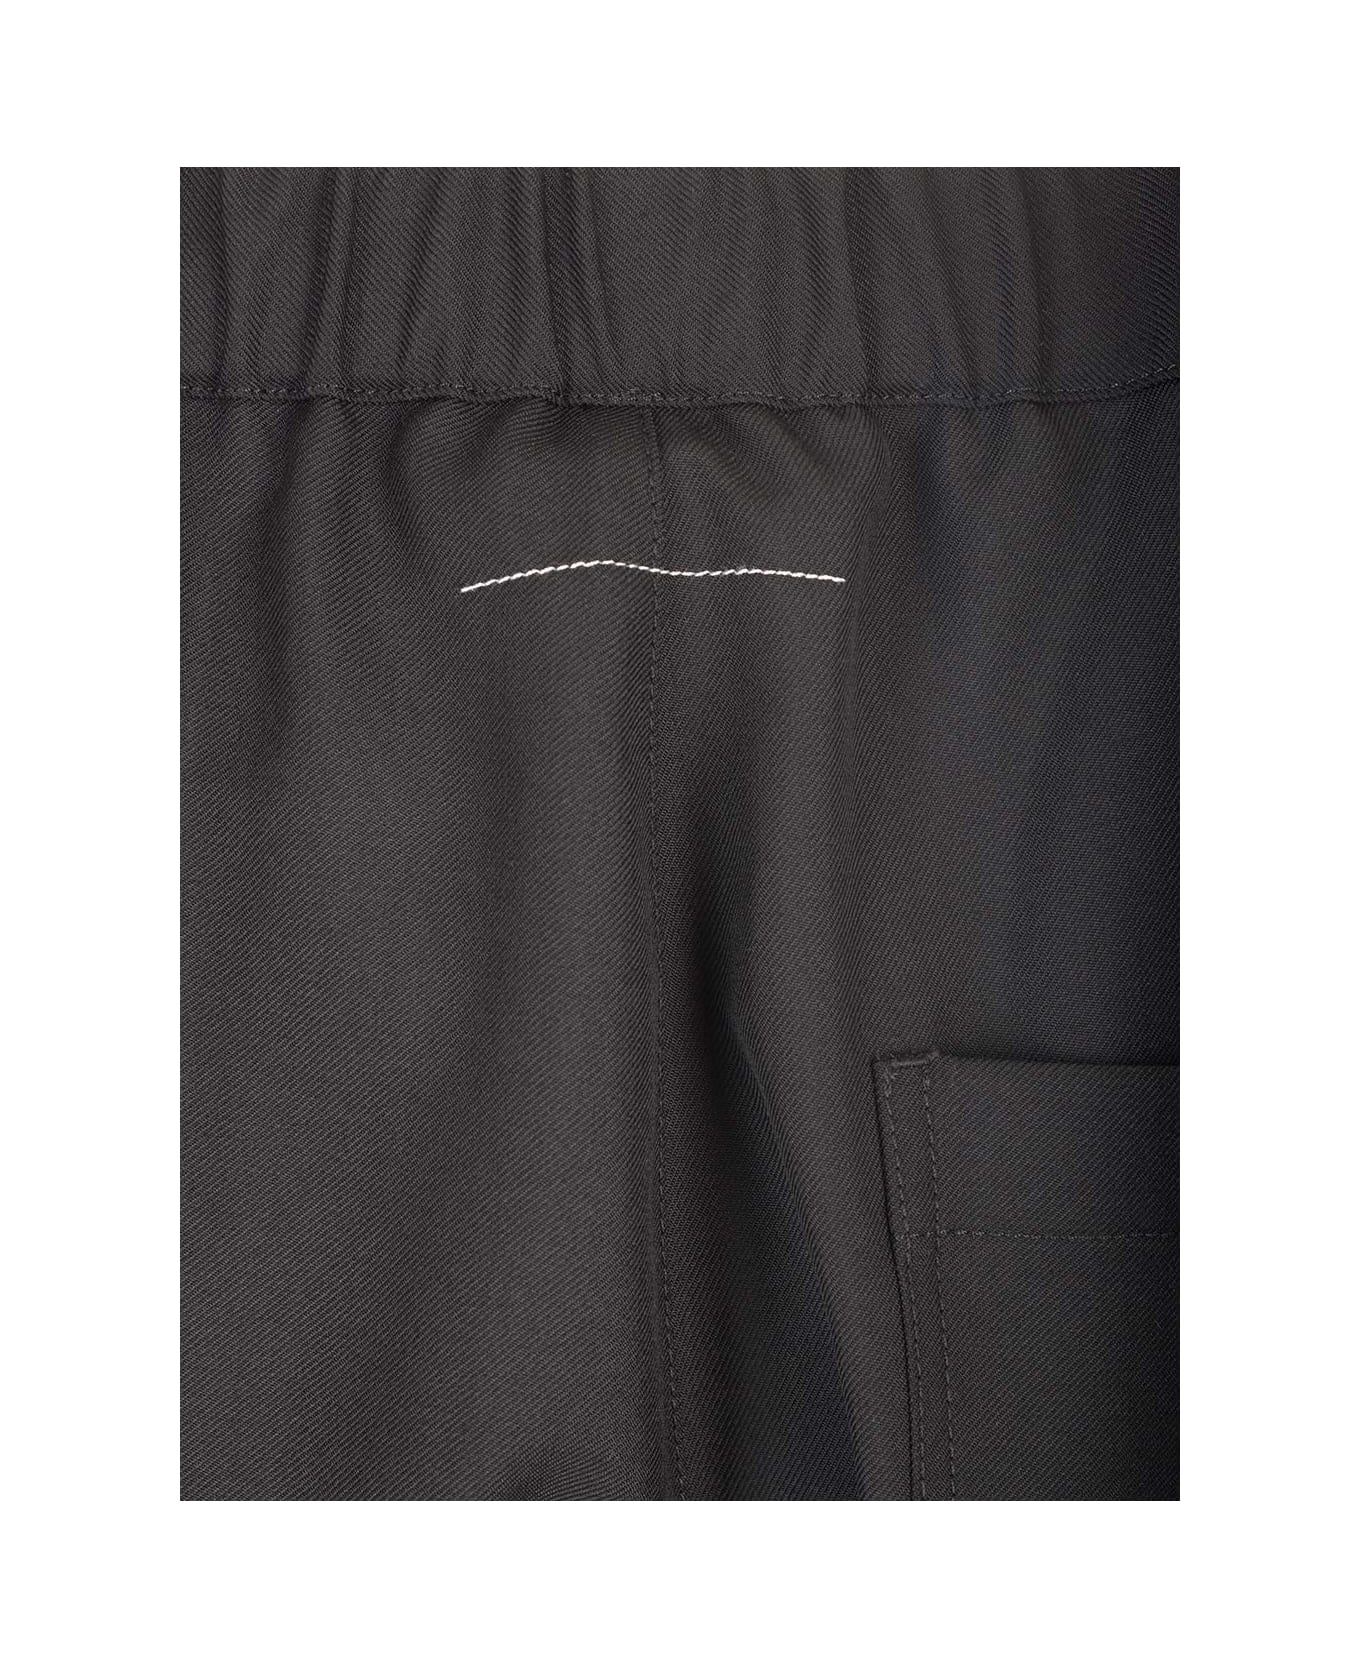 MM6 Maison Margiela Wool Blend Trousers - Nero ボトムス